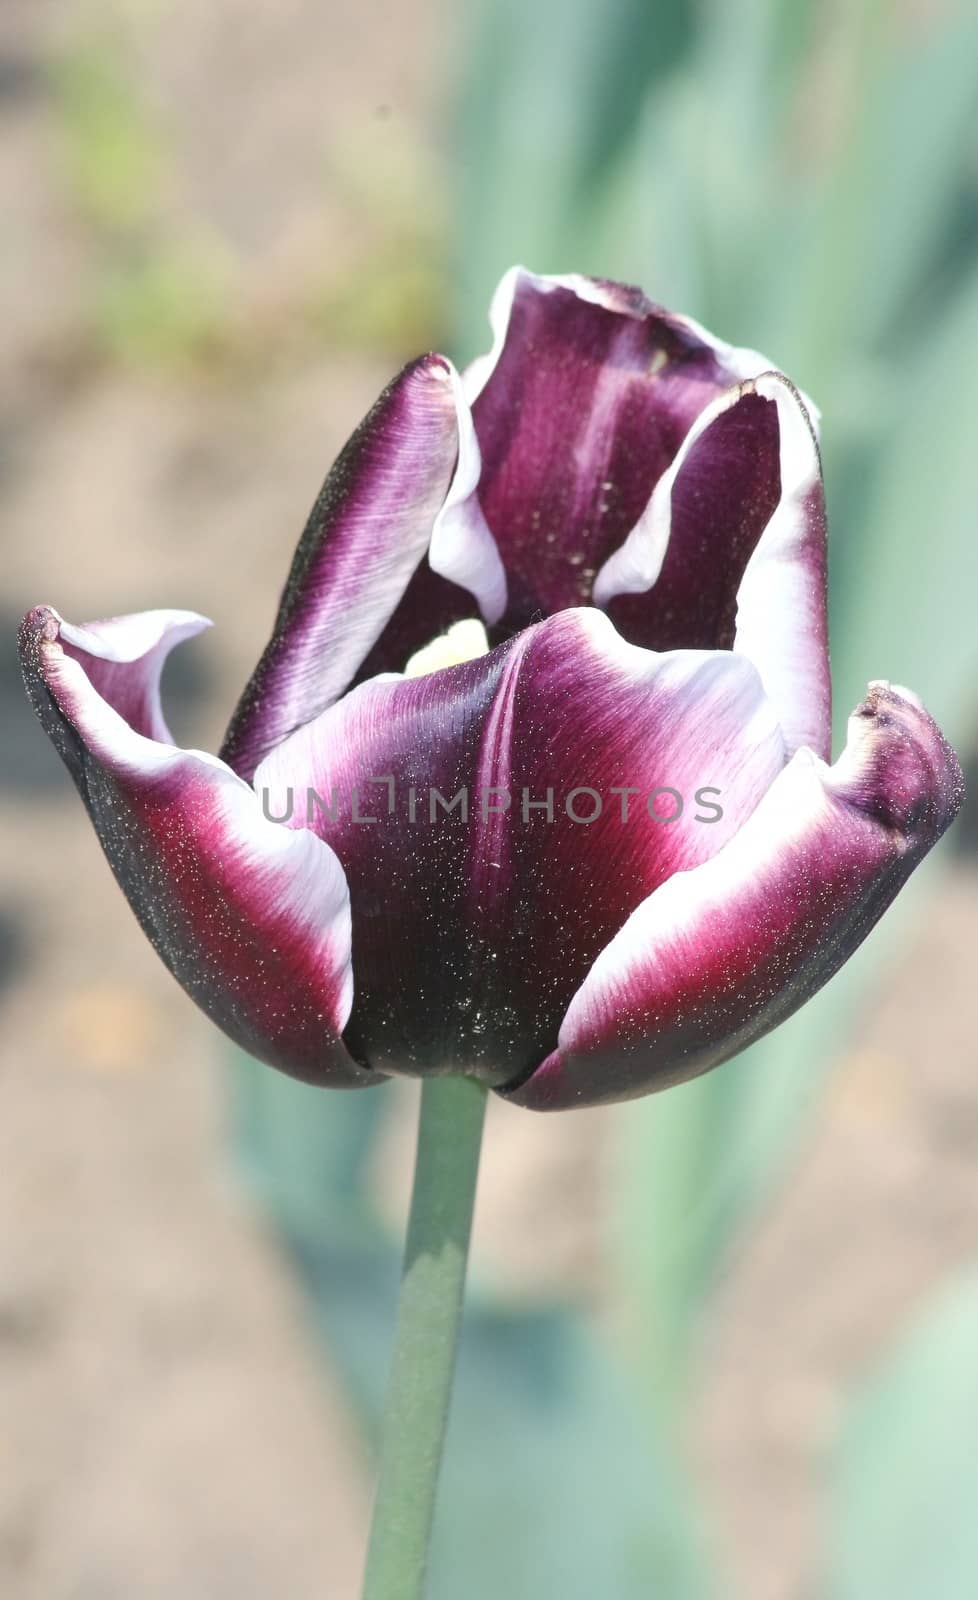 Close up of a purple flowering tulip